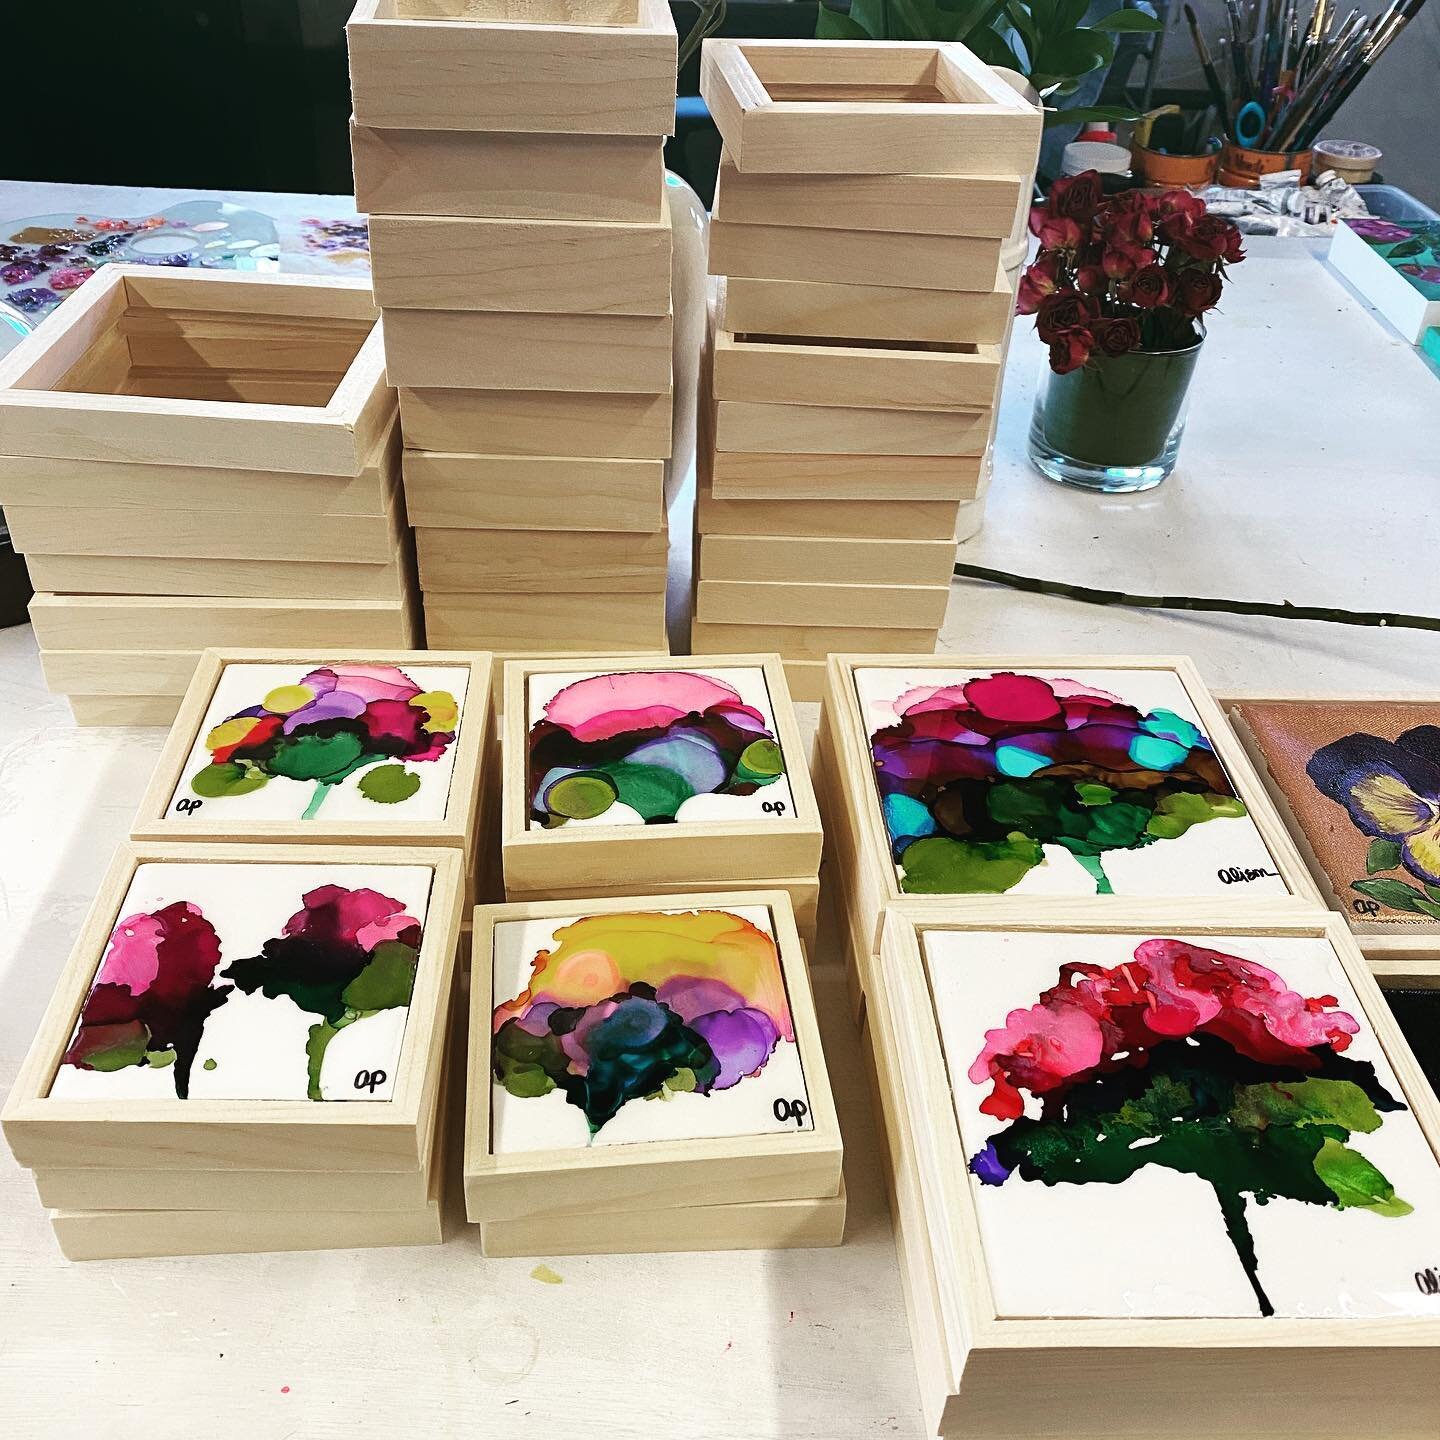 Prepping for Somerville Open Studios happening April 30th and May 1st. Mark your calendars! 

#art #artist #artistsofinstagram #artistsoninstagram #vernonstreetstudios #somerville #boston #interiordesign #flowers #traveling #somervilleart #painting #